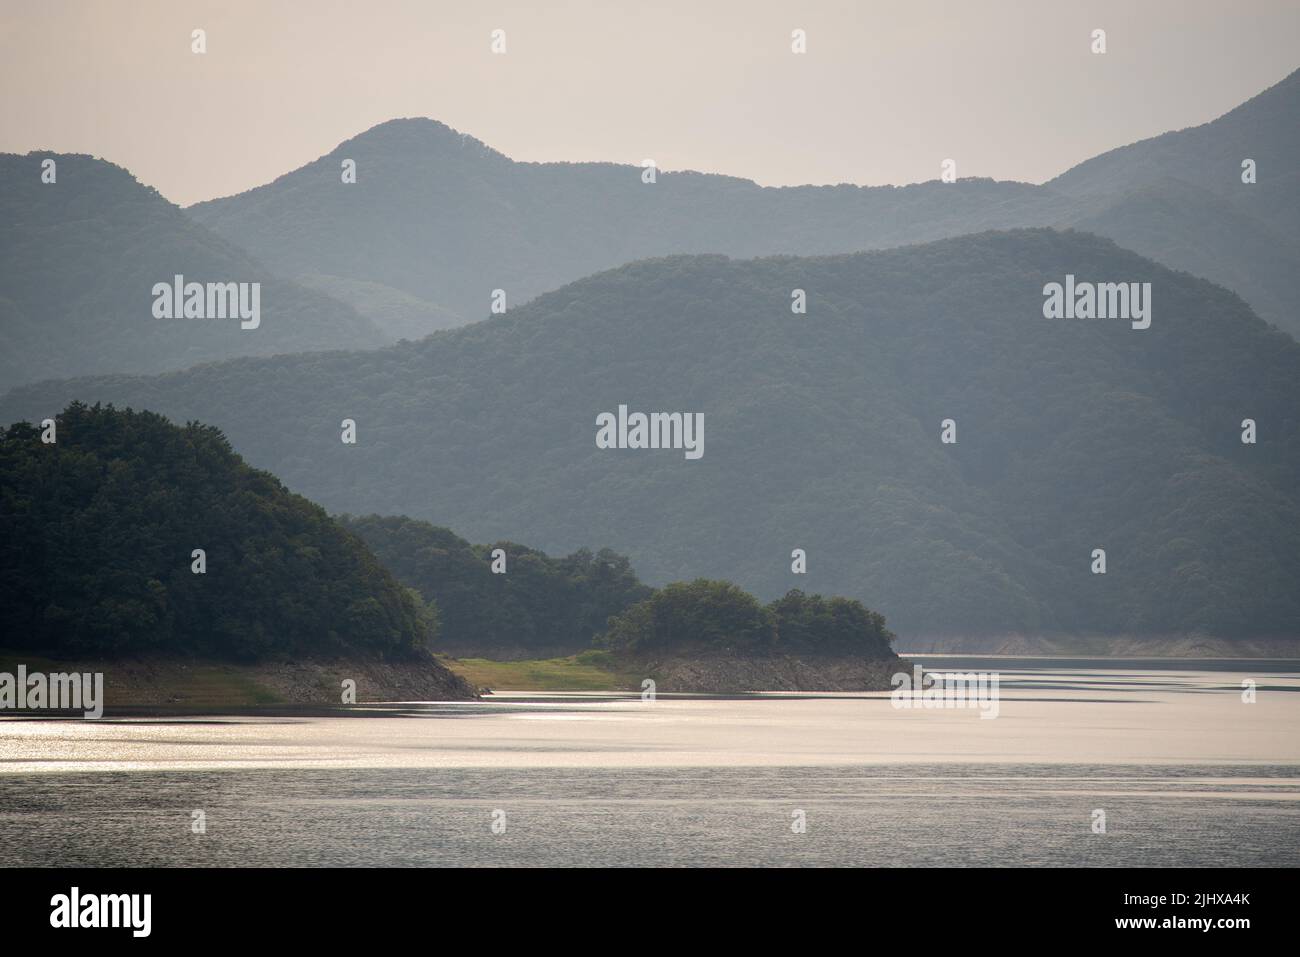 Cheongpung Lake near Jecheon city in Chungcheongbukdo province in South Korea Stock Photo